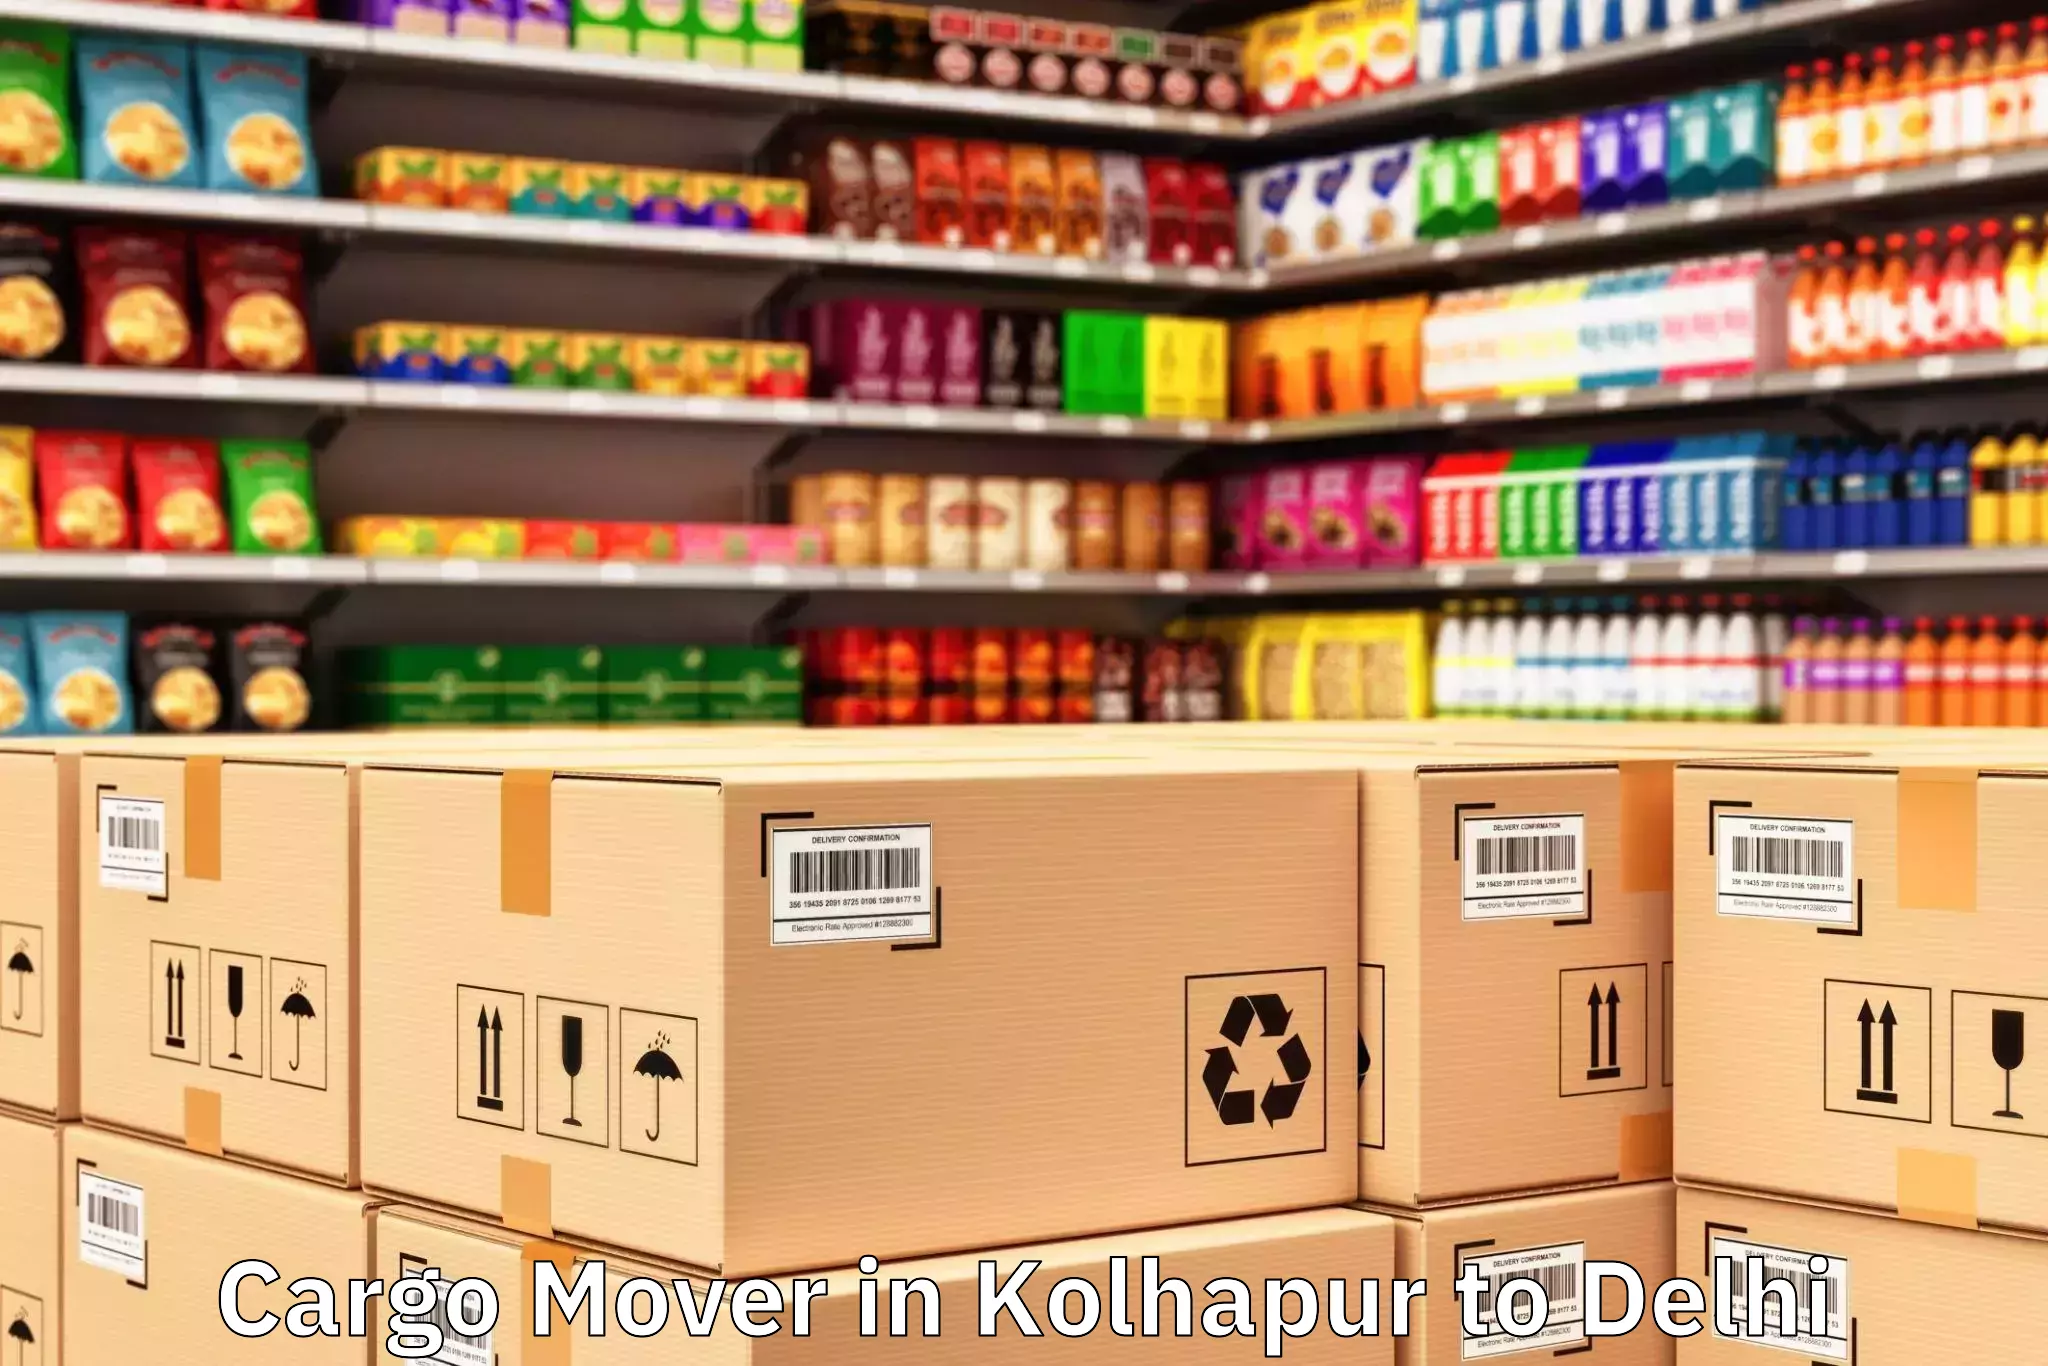 Kolhapur to Tdi Paragon Mall Cargo Mover Booking